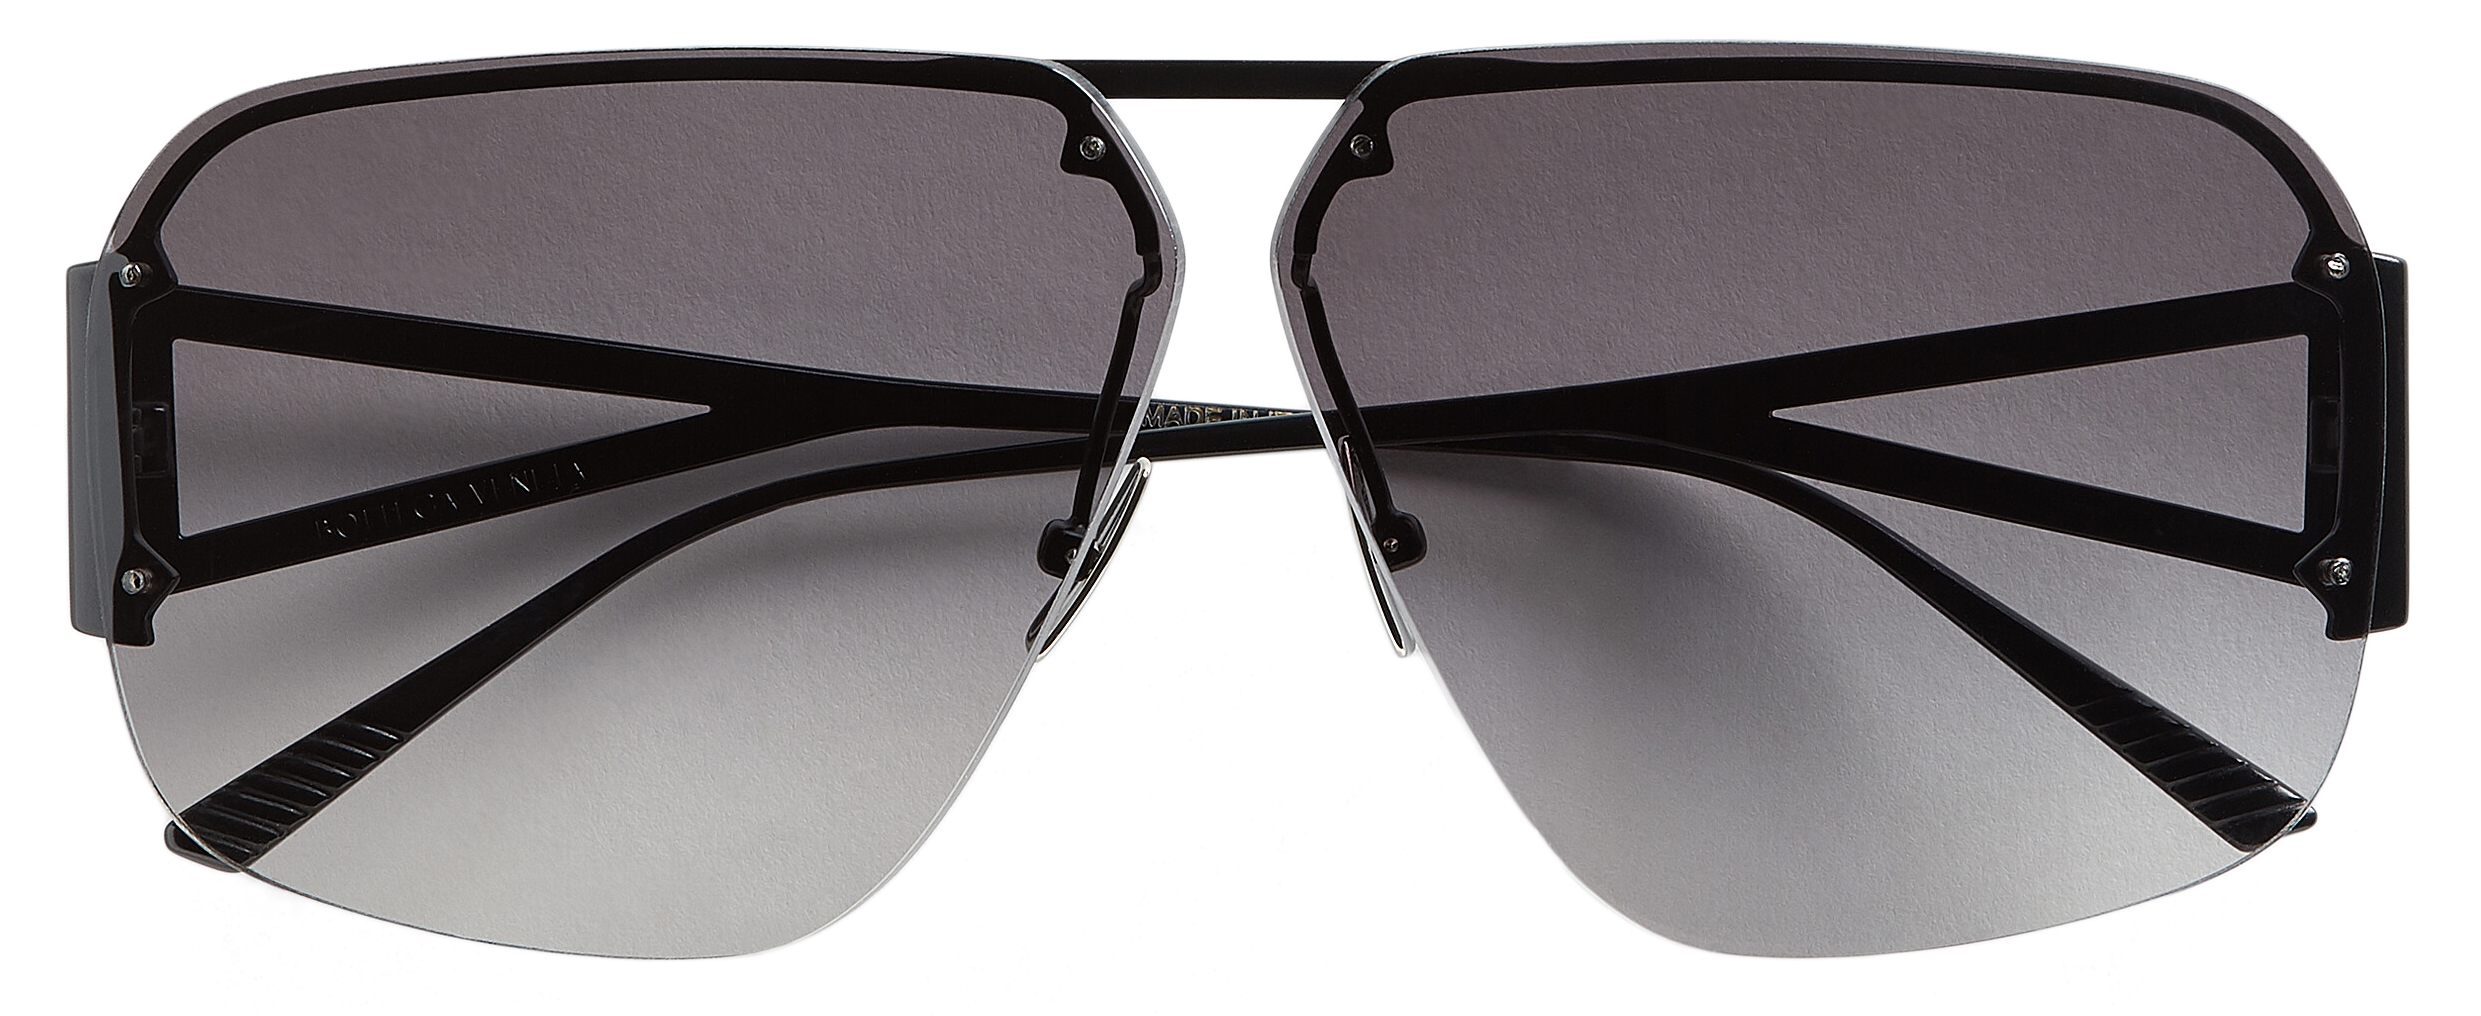 Bottega Veneta Eyewear, Aviator Metal Sunglasses, Mens, 01bk